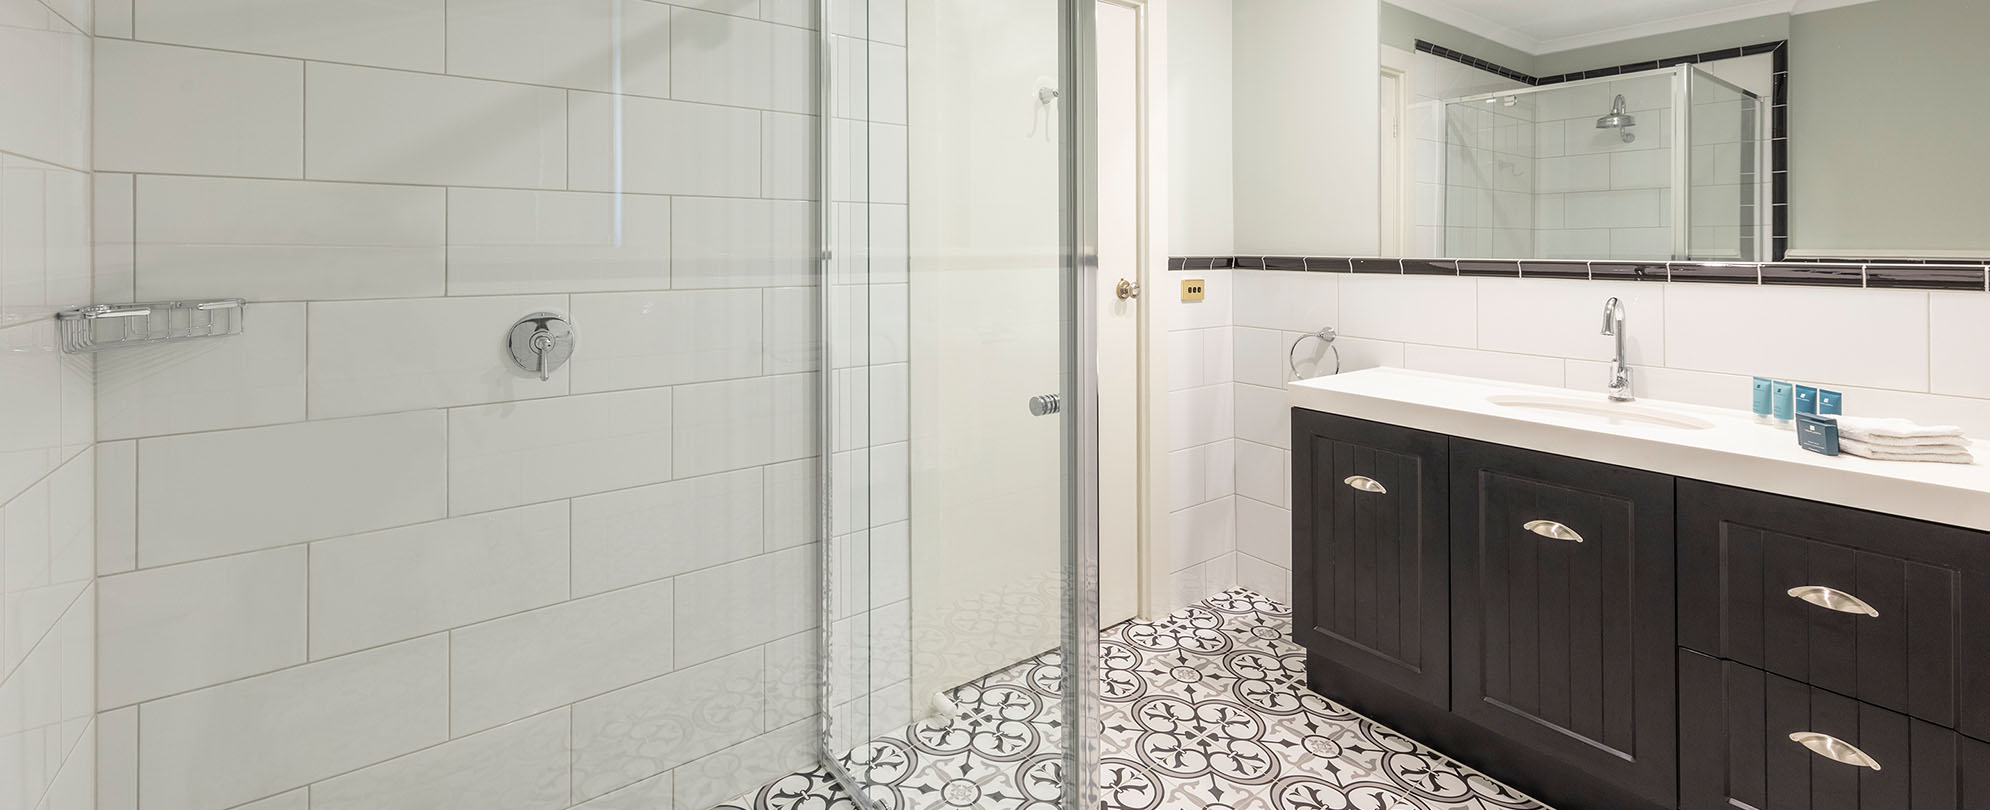 A walk-in shower and bathroom vanity inside a suite at Club Wyndham Ballarat